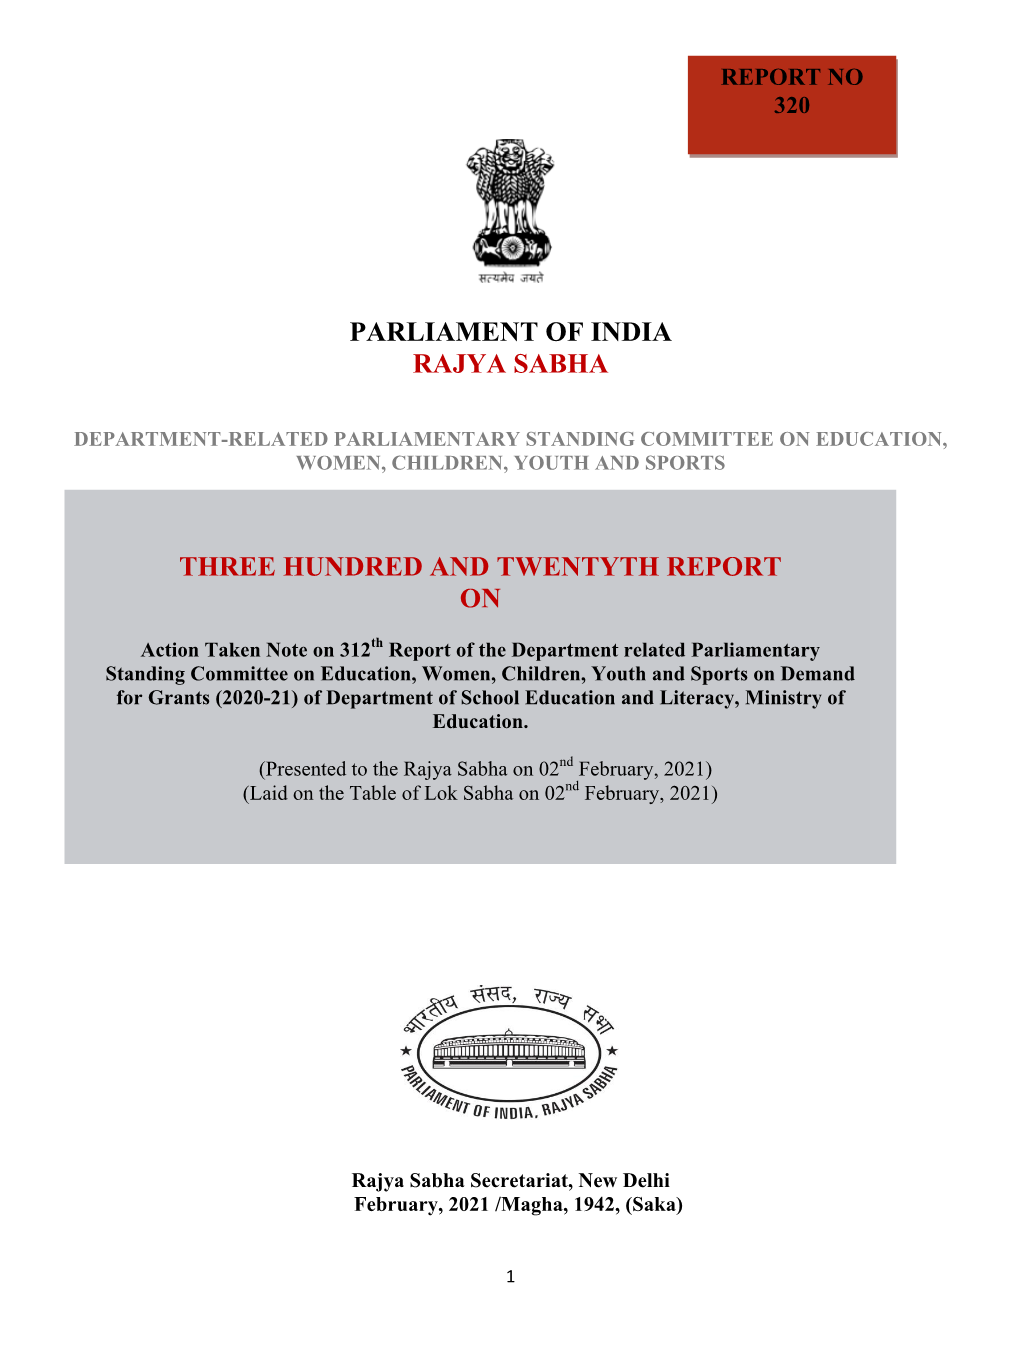 Parliament of India Rajya Sabha Three Hundred and Twentyth Report On